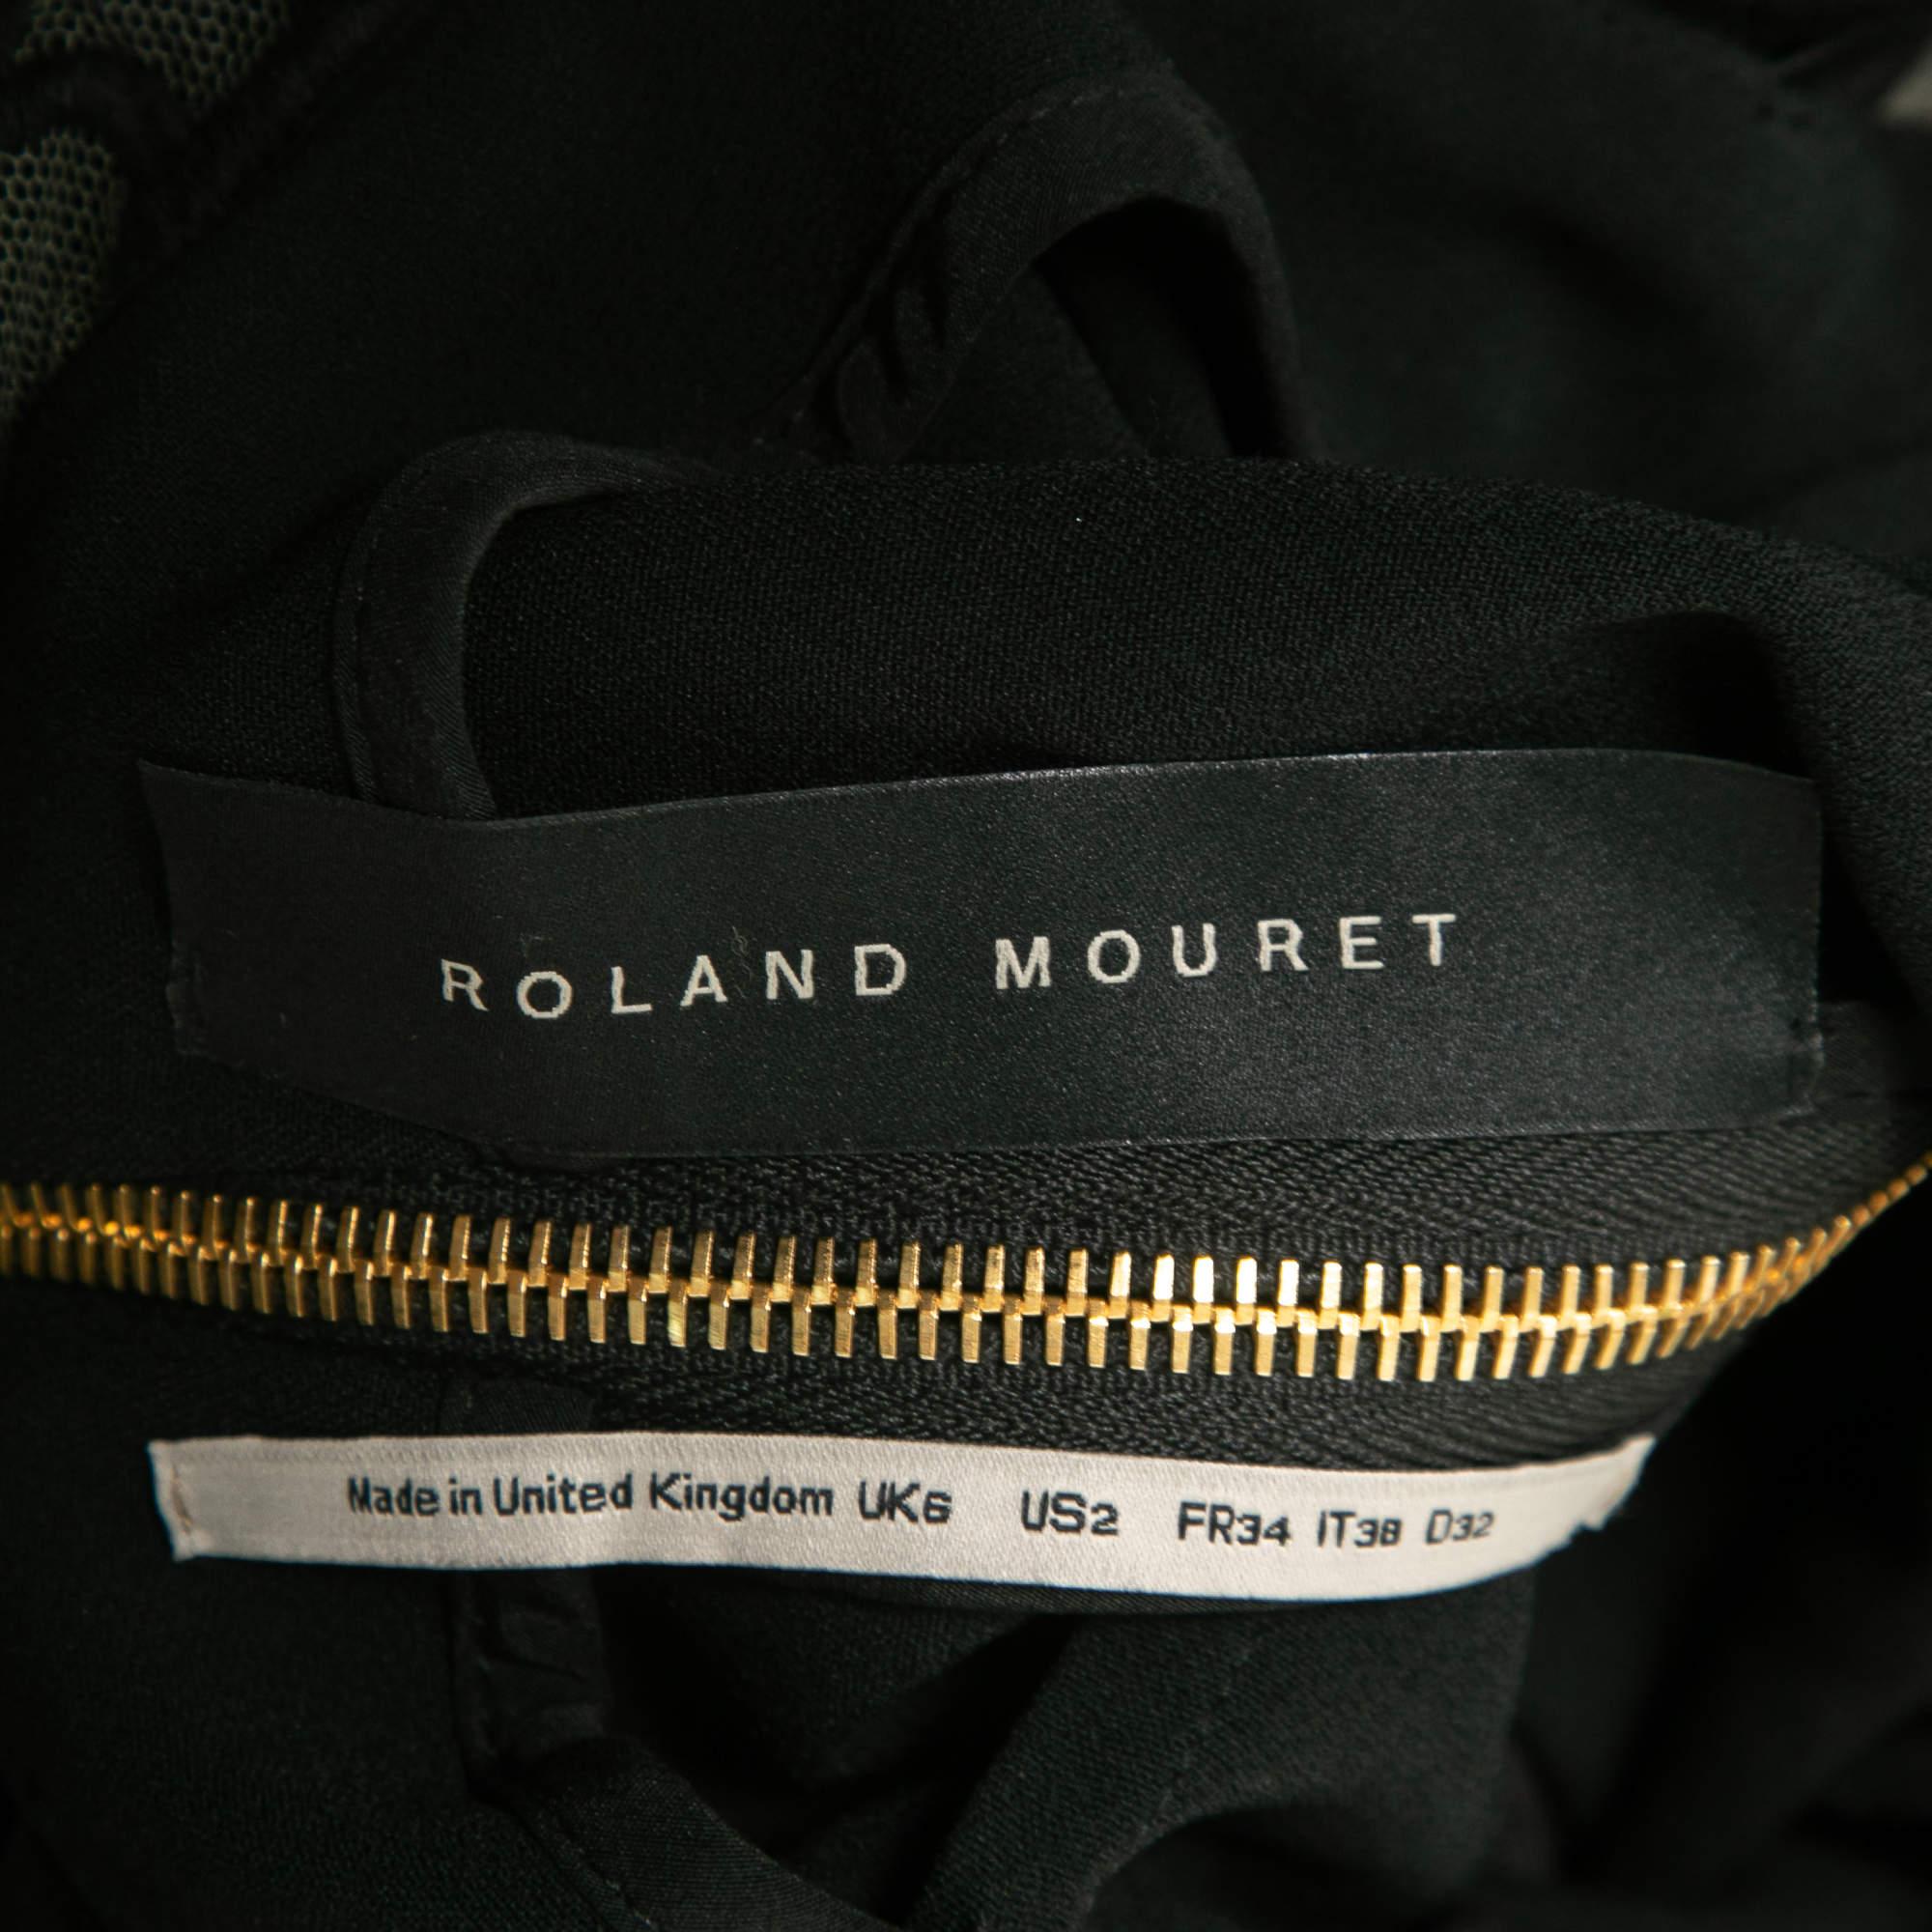 Roland Mouret Black Crepe Lace Inset Vasall Long Dress S 2